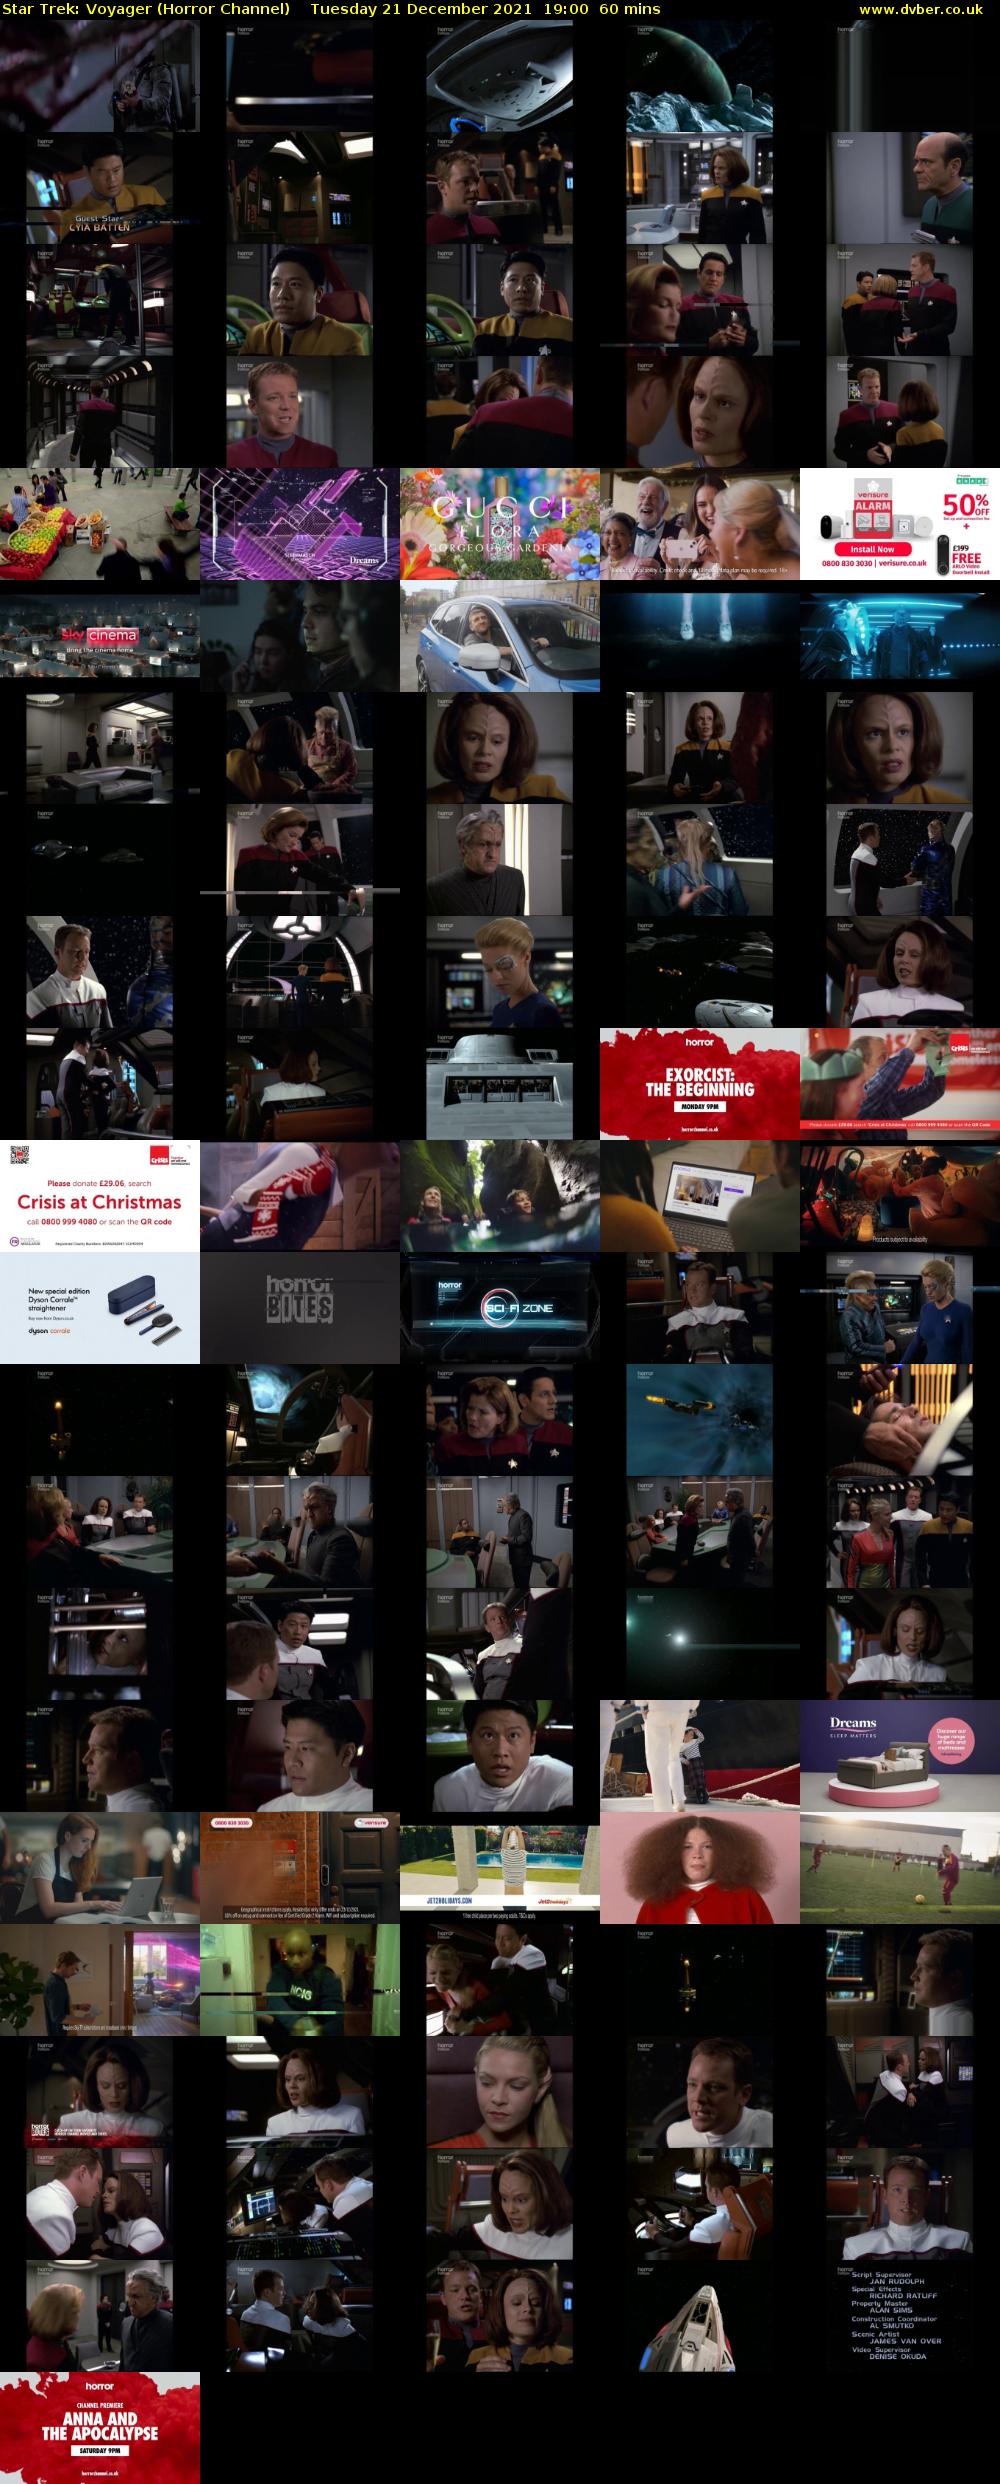 Star Trek: Voyager (Horror Channel) Tuesday 21 December 2021 19:00 - 20:00